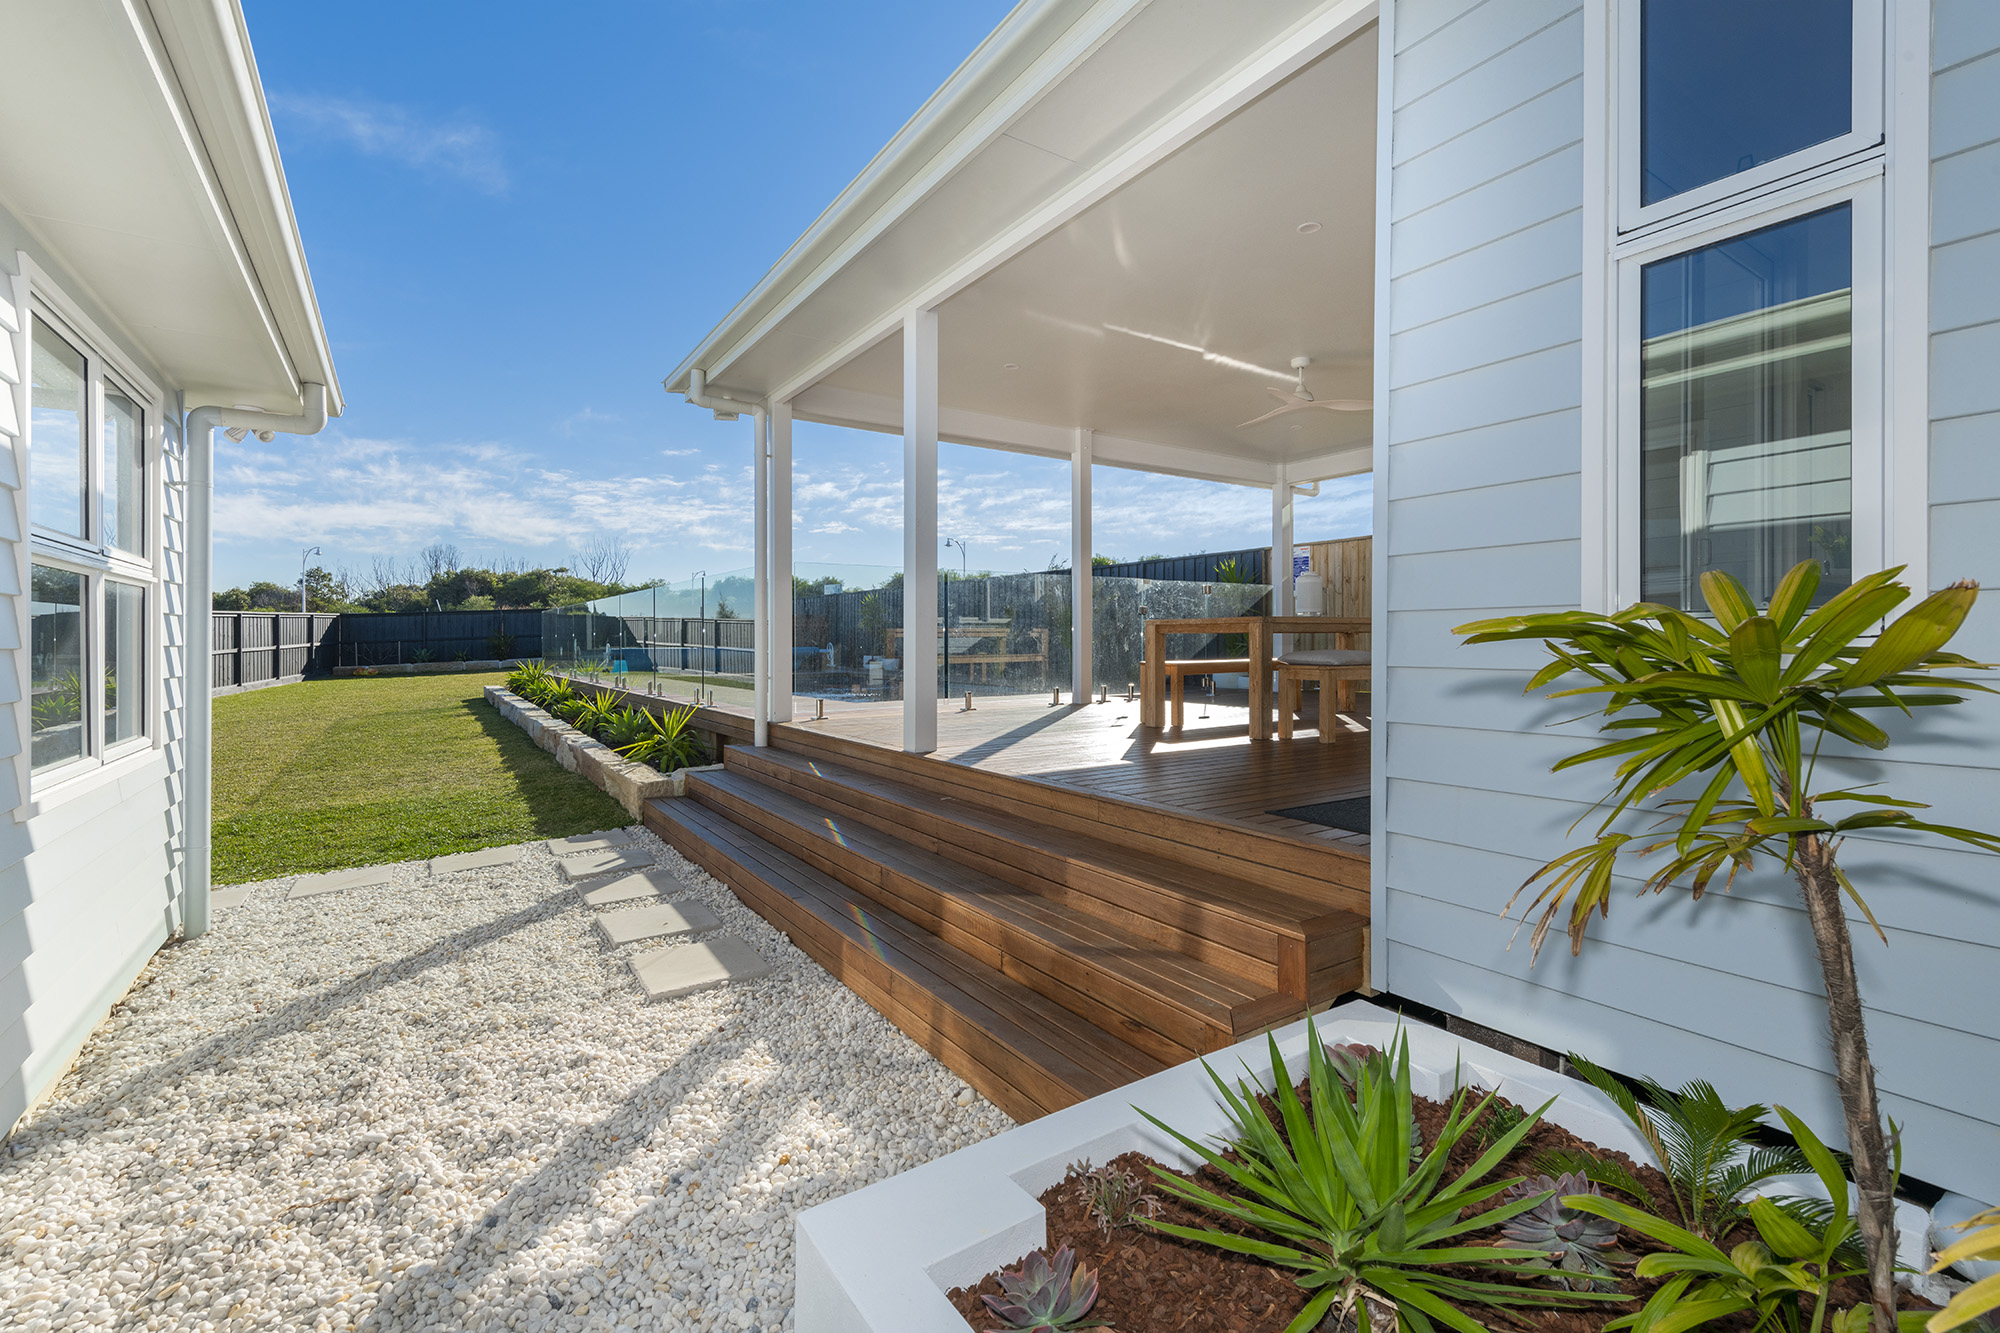 Rear Verandah with Yard - Home Design Ideas